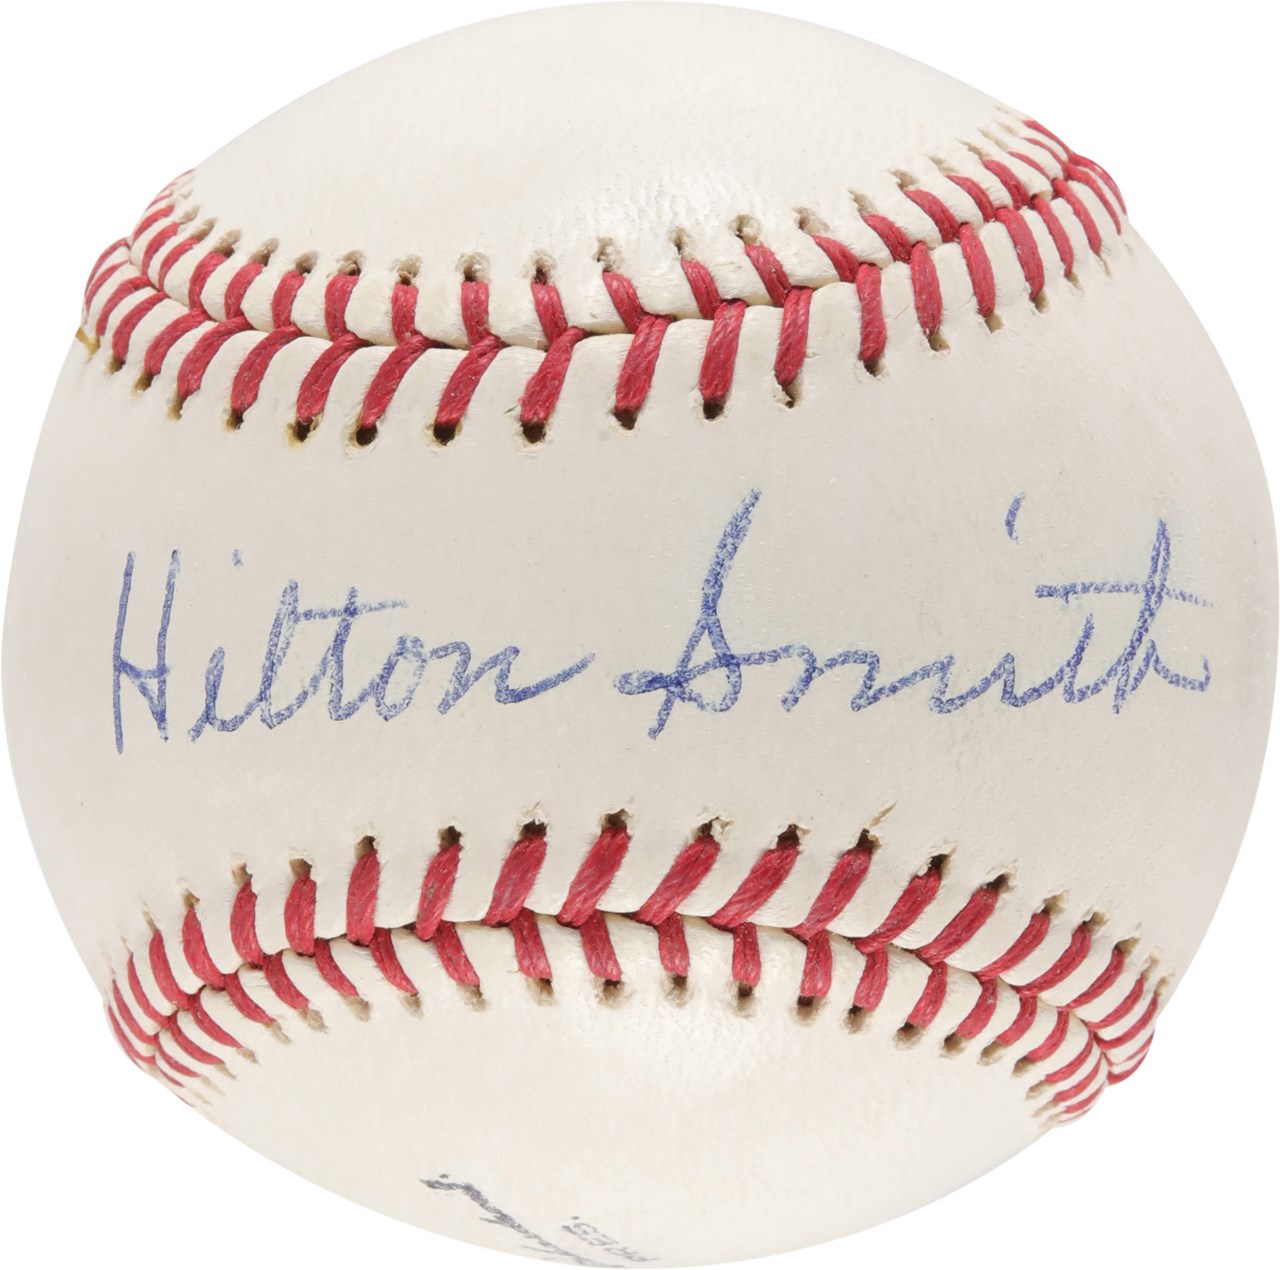 Hilton Smith Single Signed Baseball (PSA 8 Signature)